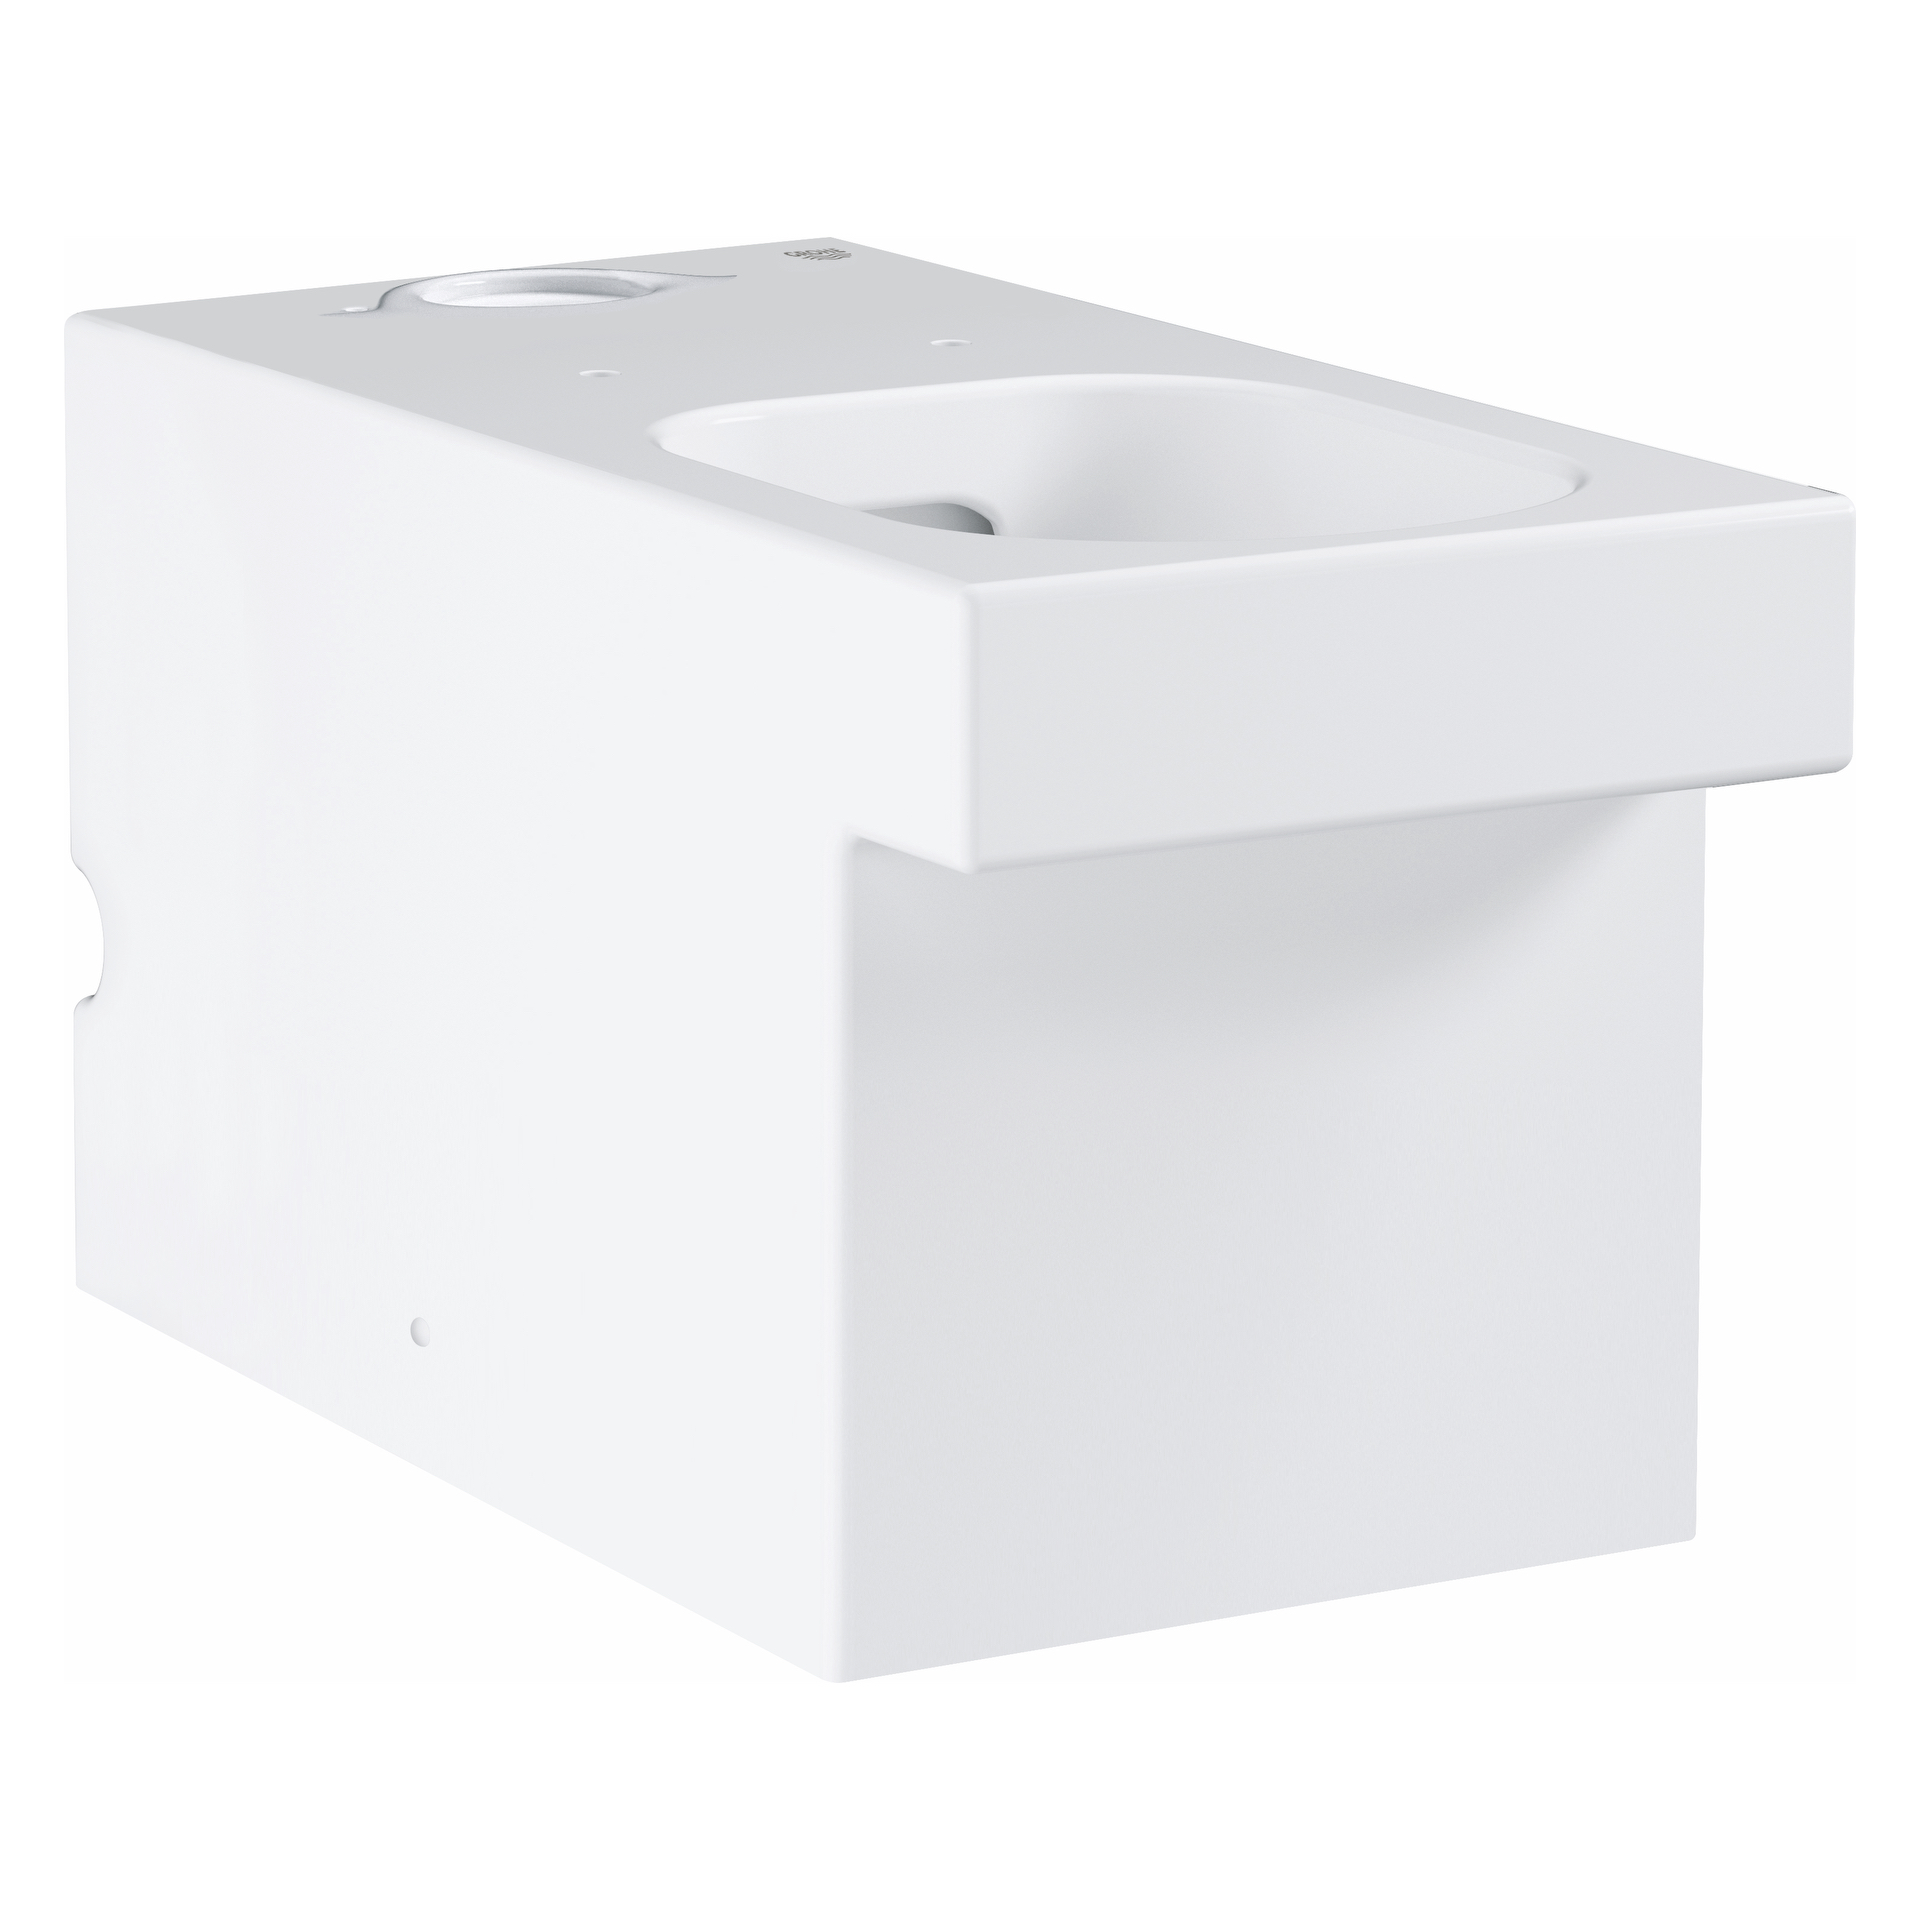 GROHE Stand-WC-Kombination Cube Keramik 39484_H, Abgang universal, spülrandlos, PureGuard Hygieneoberfläche, aus Sanitärkeramik, alpinweiß